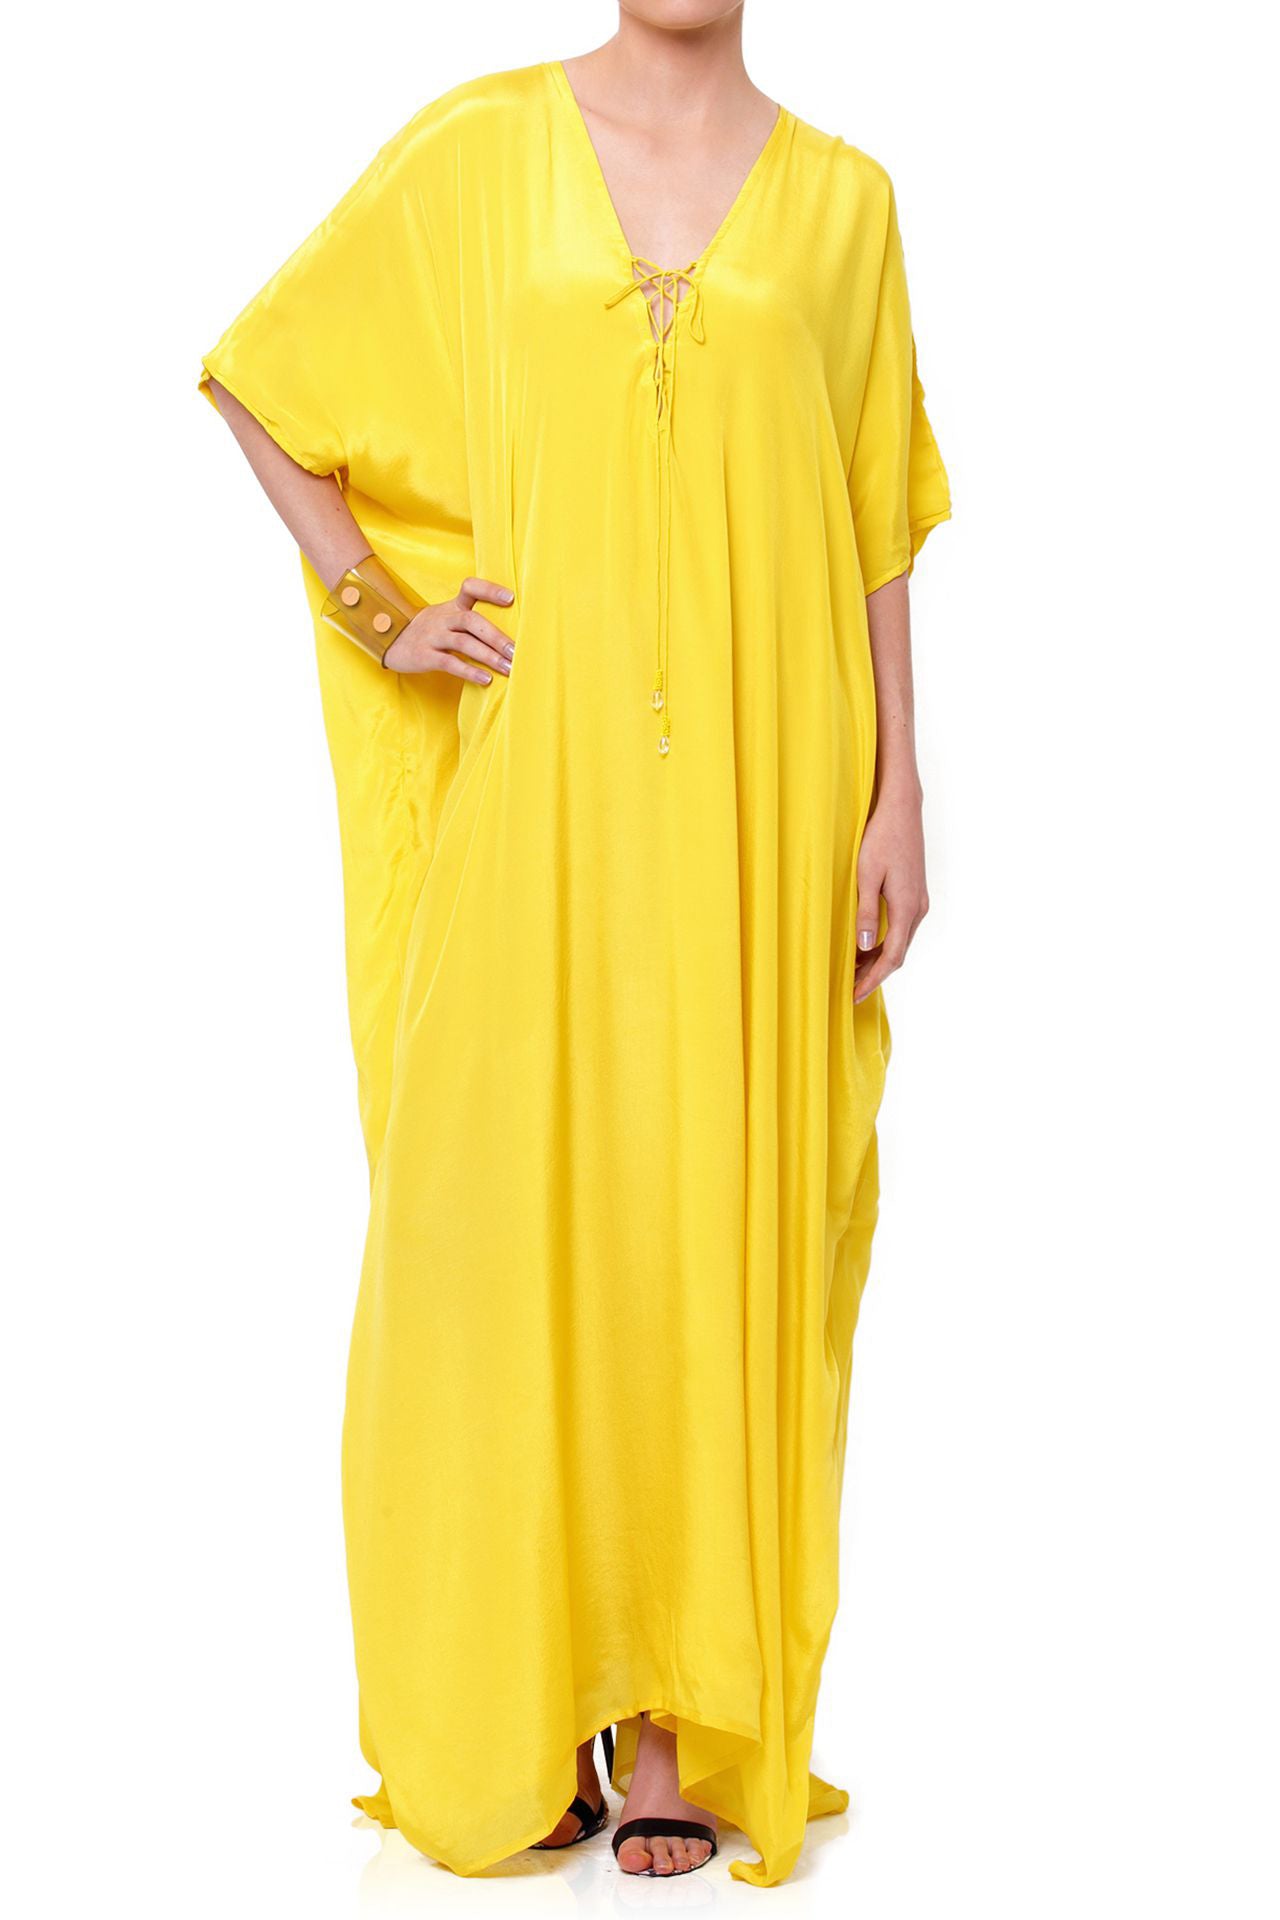 Buy Dhilon Creations Yellow Kaftan Dress (XX-Large) at Amazon.in